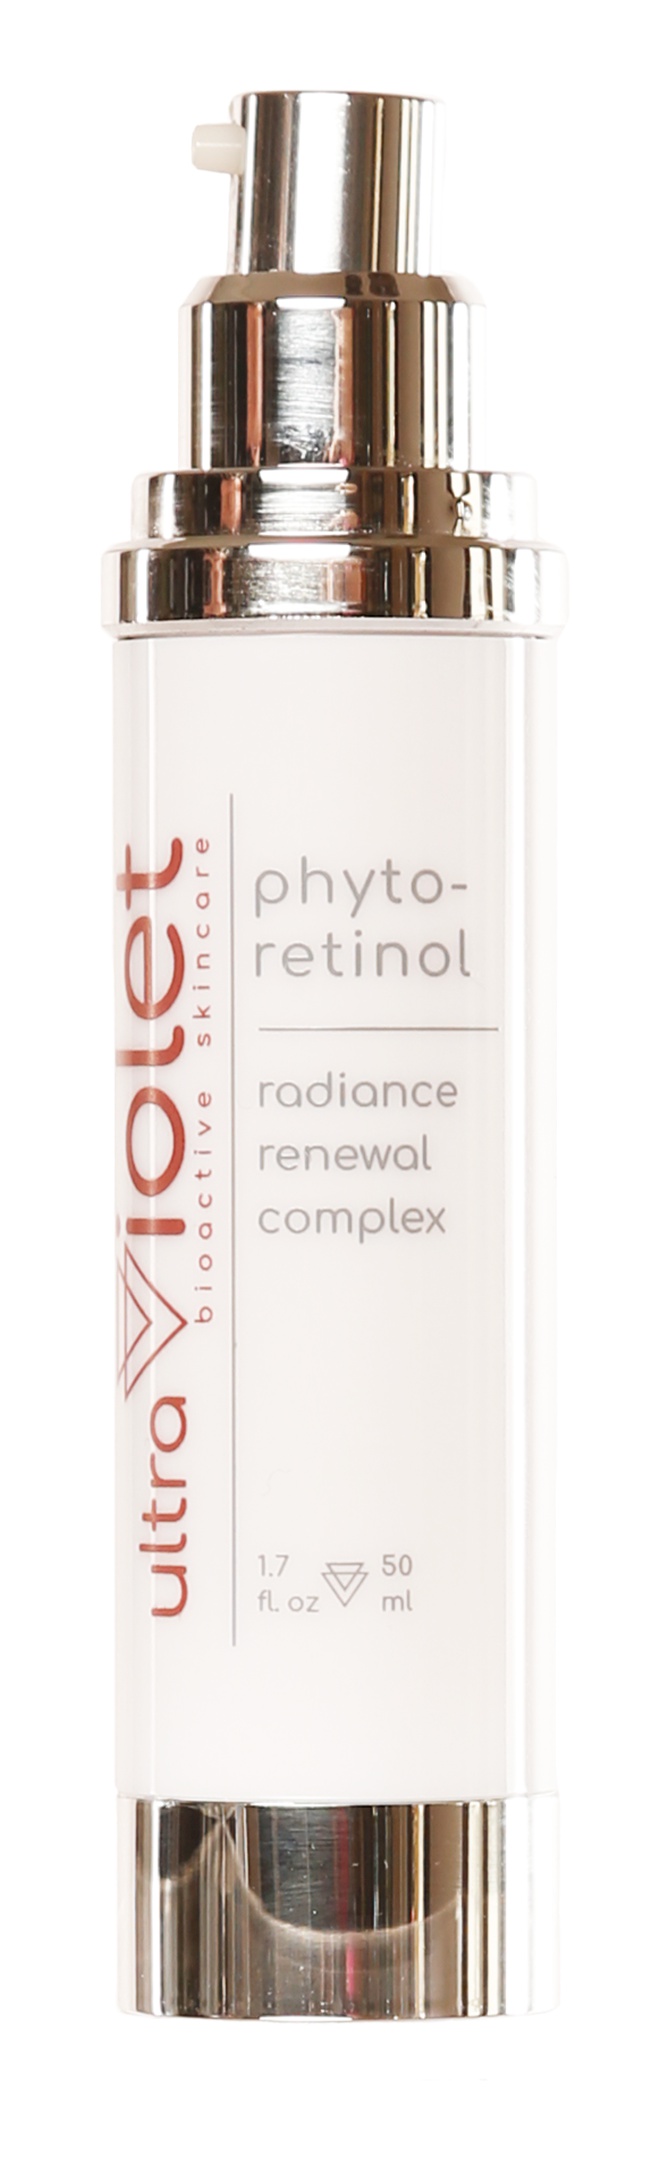 Ultra Violet Phyto Retinol | Radiance Renewal Complex